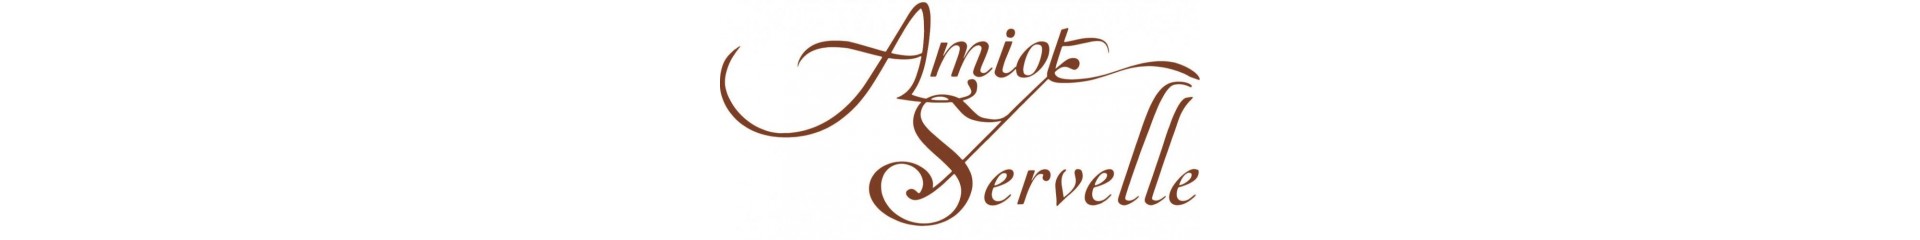 Amiot-Servelle - Bourgogne - 1 Bis